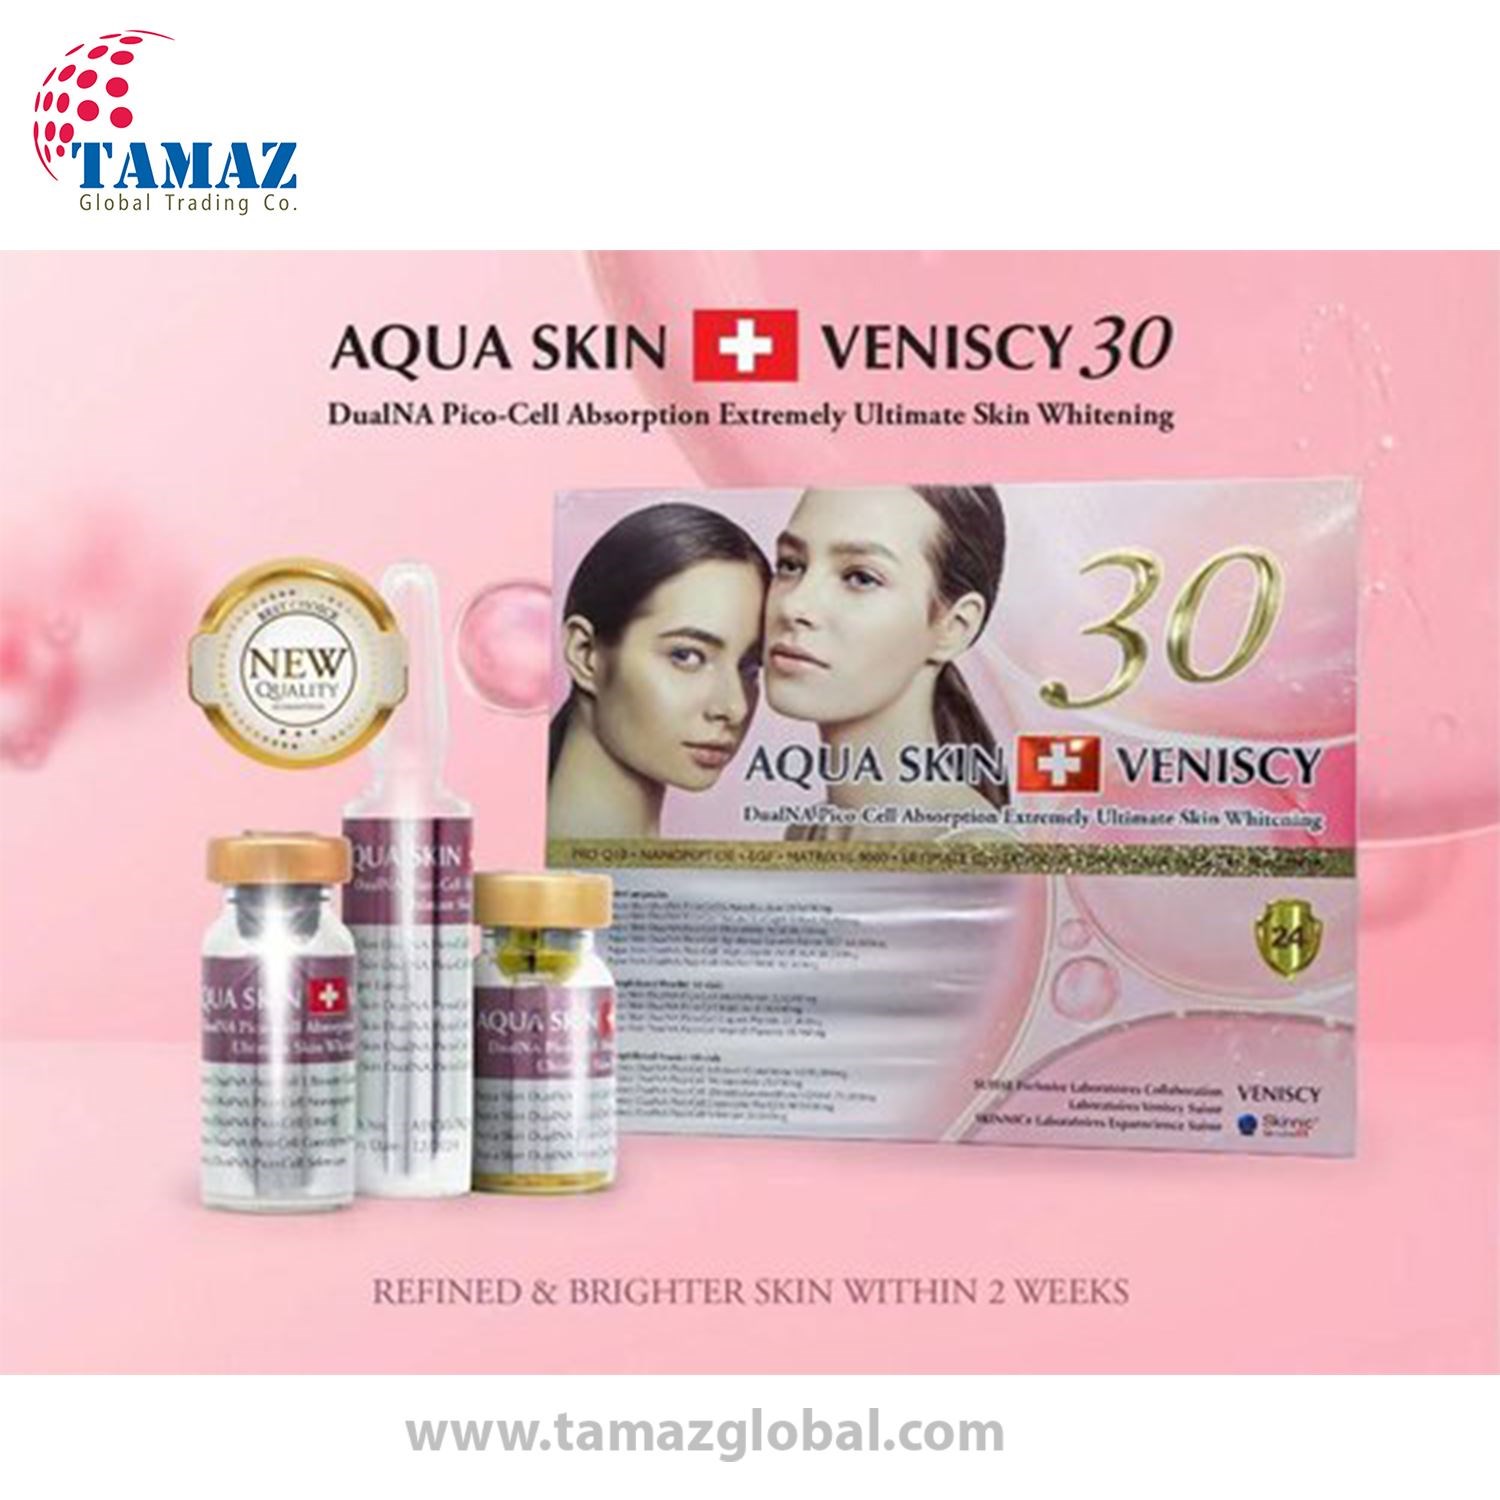 aqua skin vensicy 30 dualna pico cell absorbtion